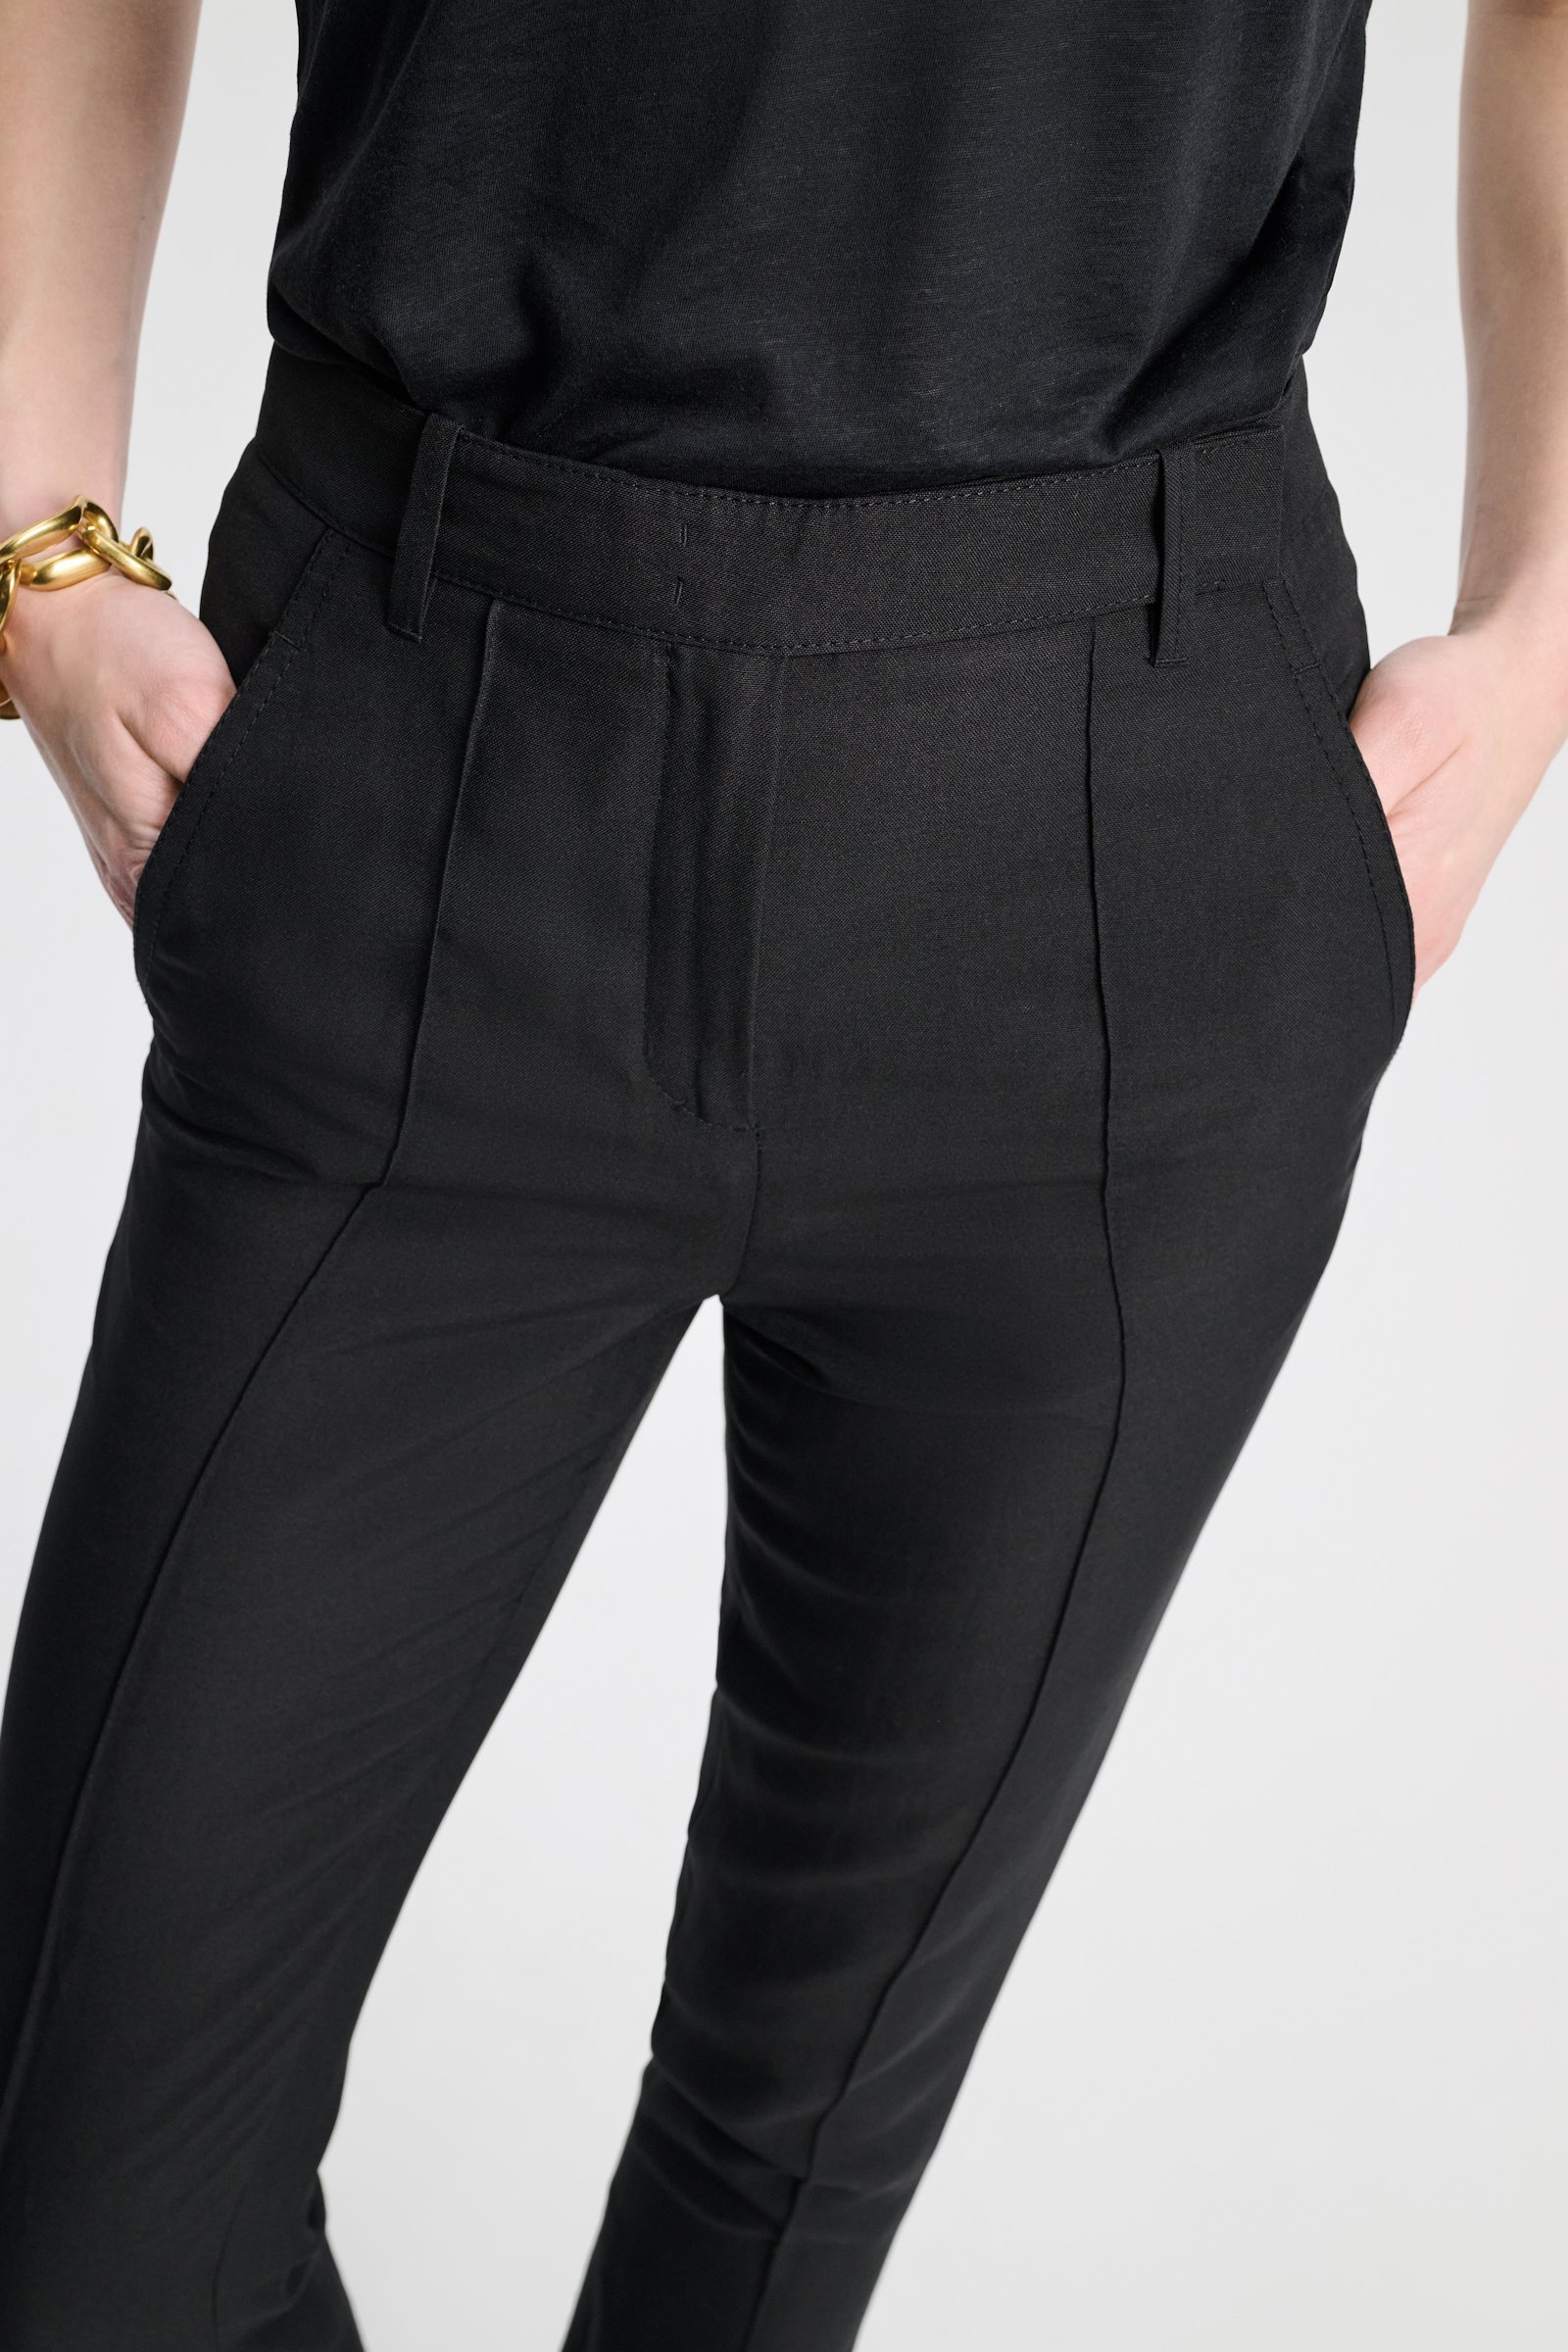 Dorothee Schumacher Slim fit linen blend pants with pintucks pure black